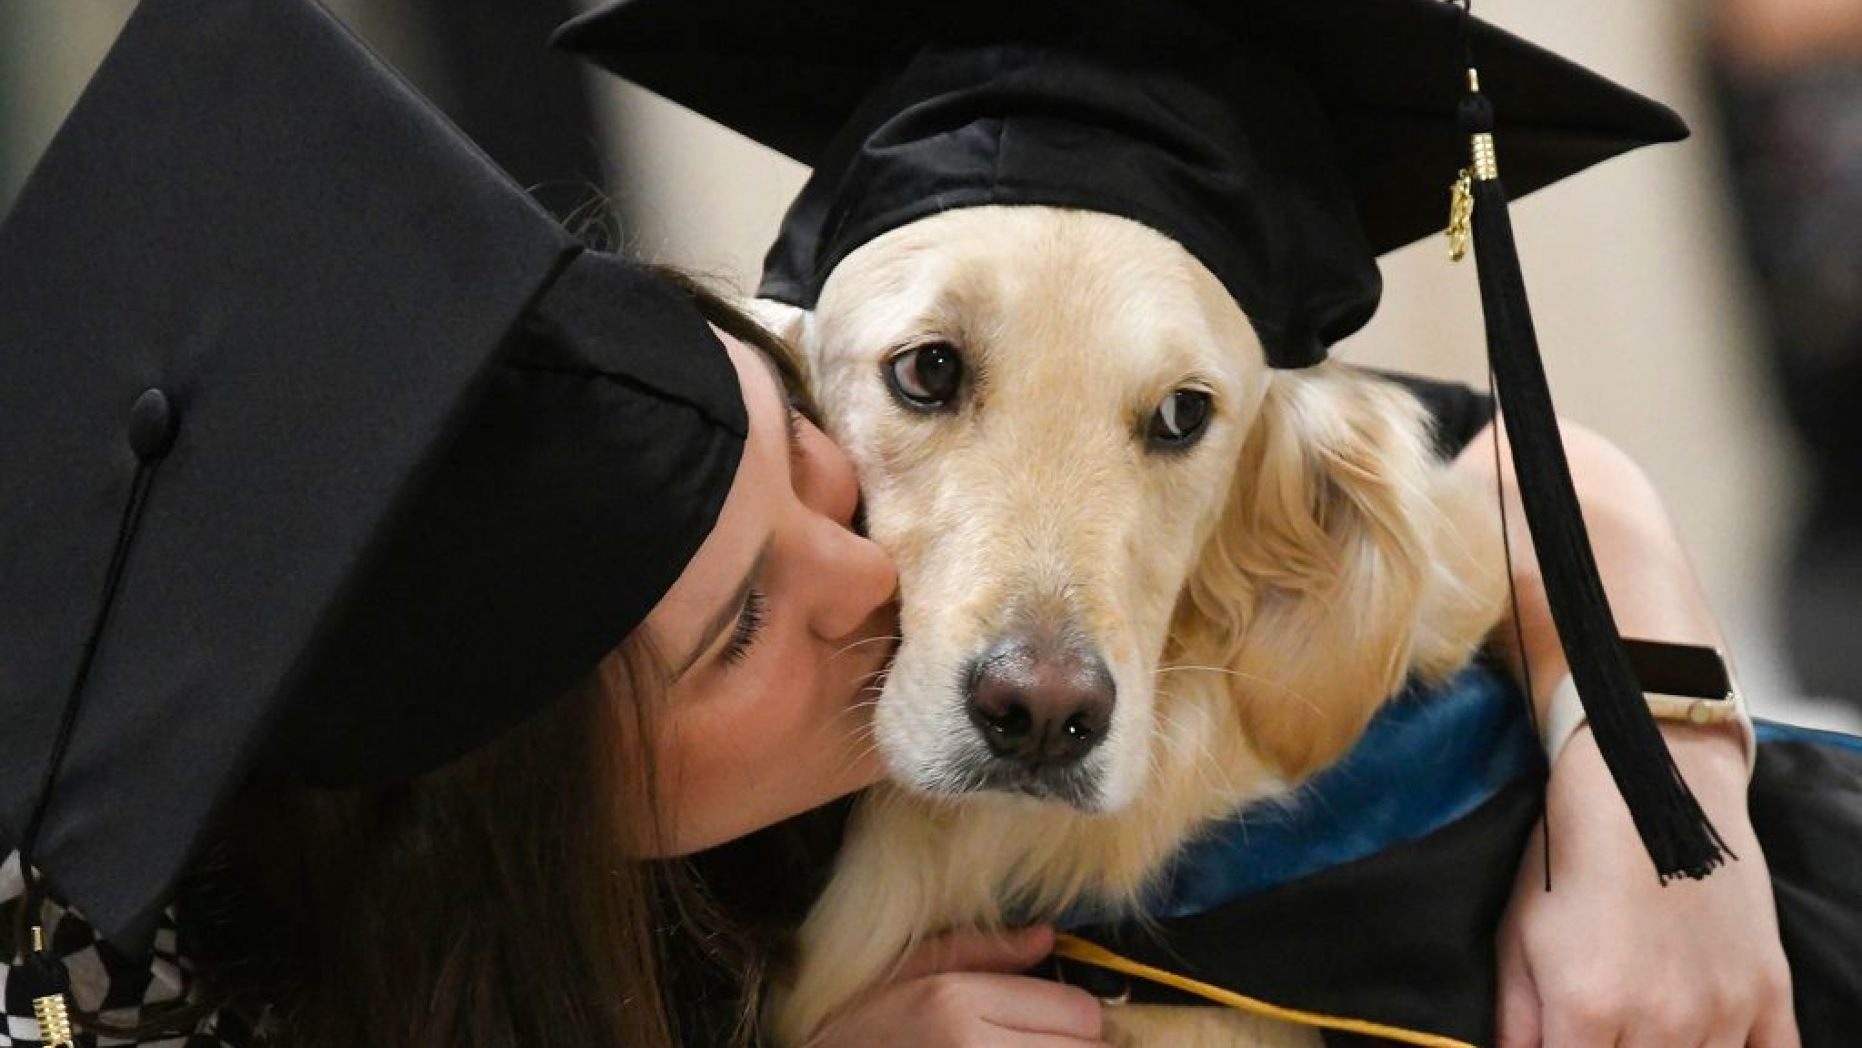 Service Dog Graduates With Master's Degree Alongside Owner